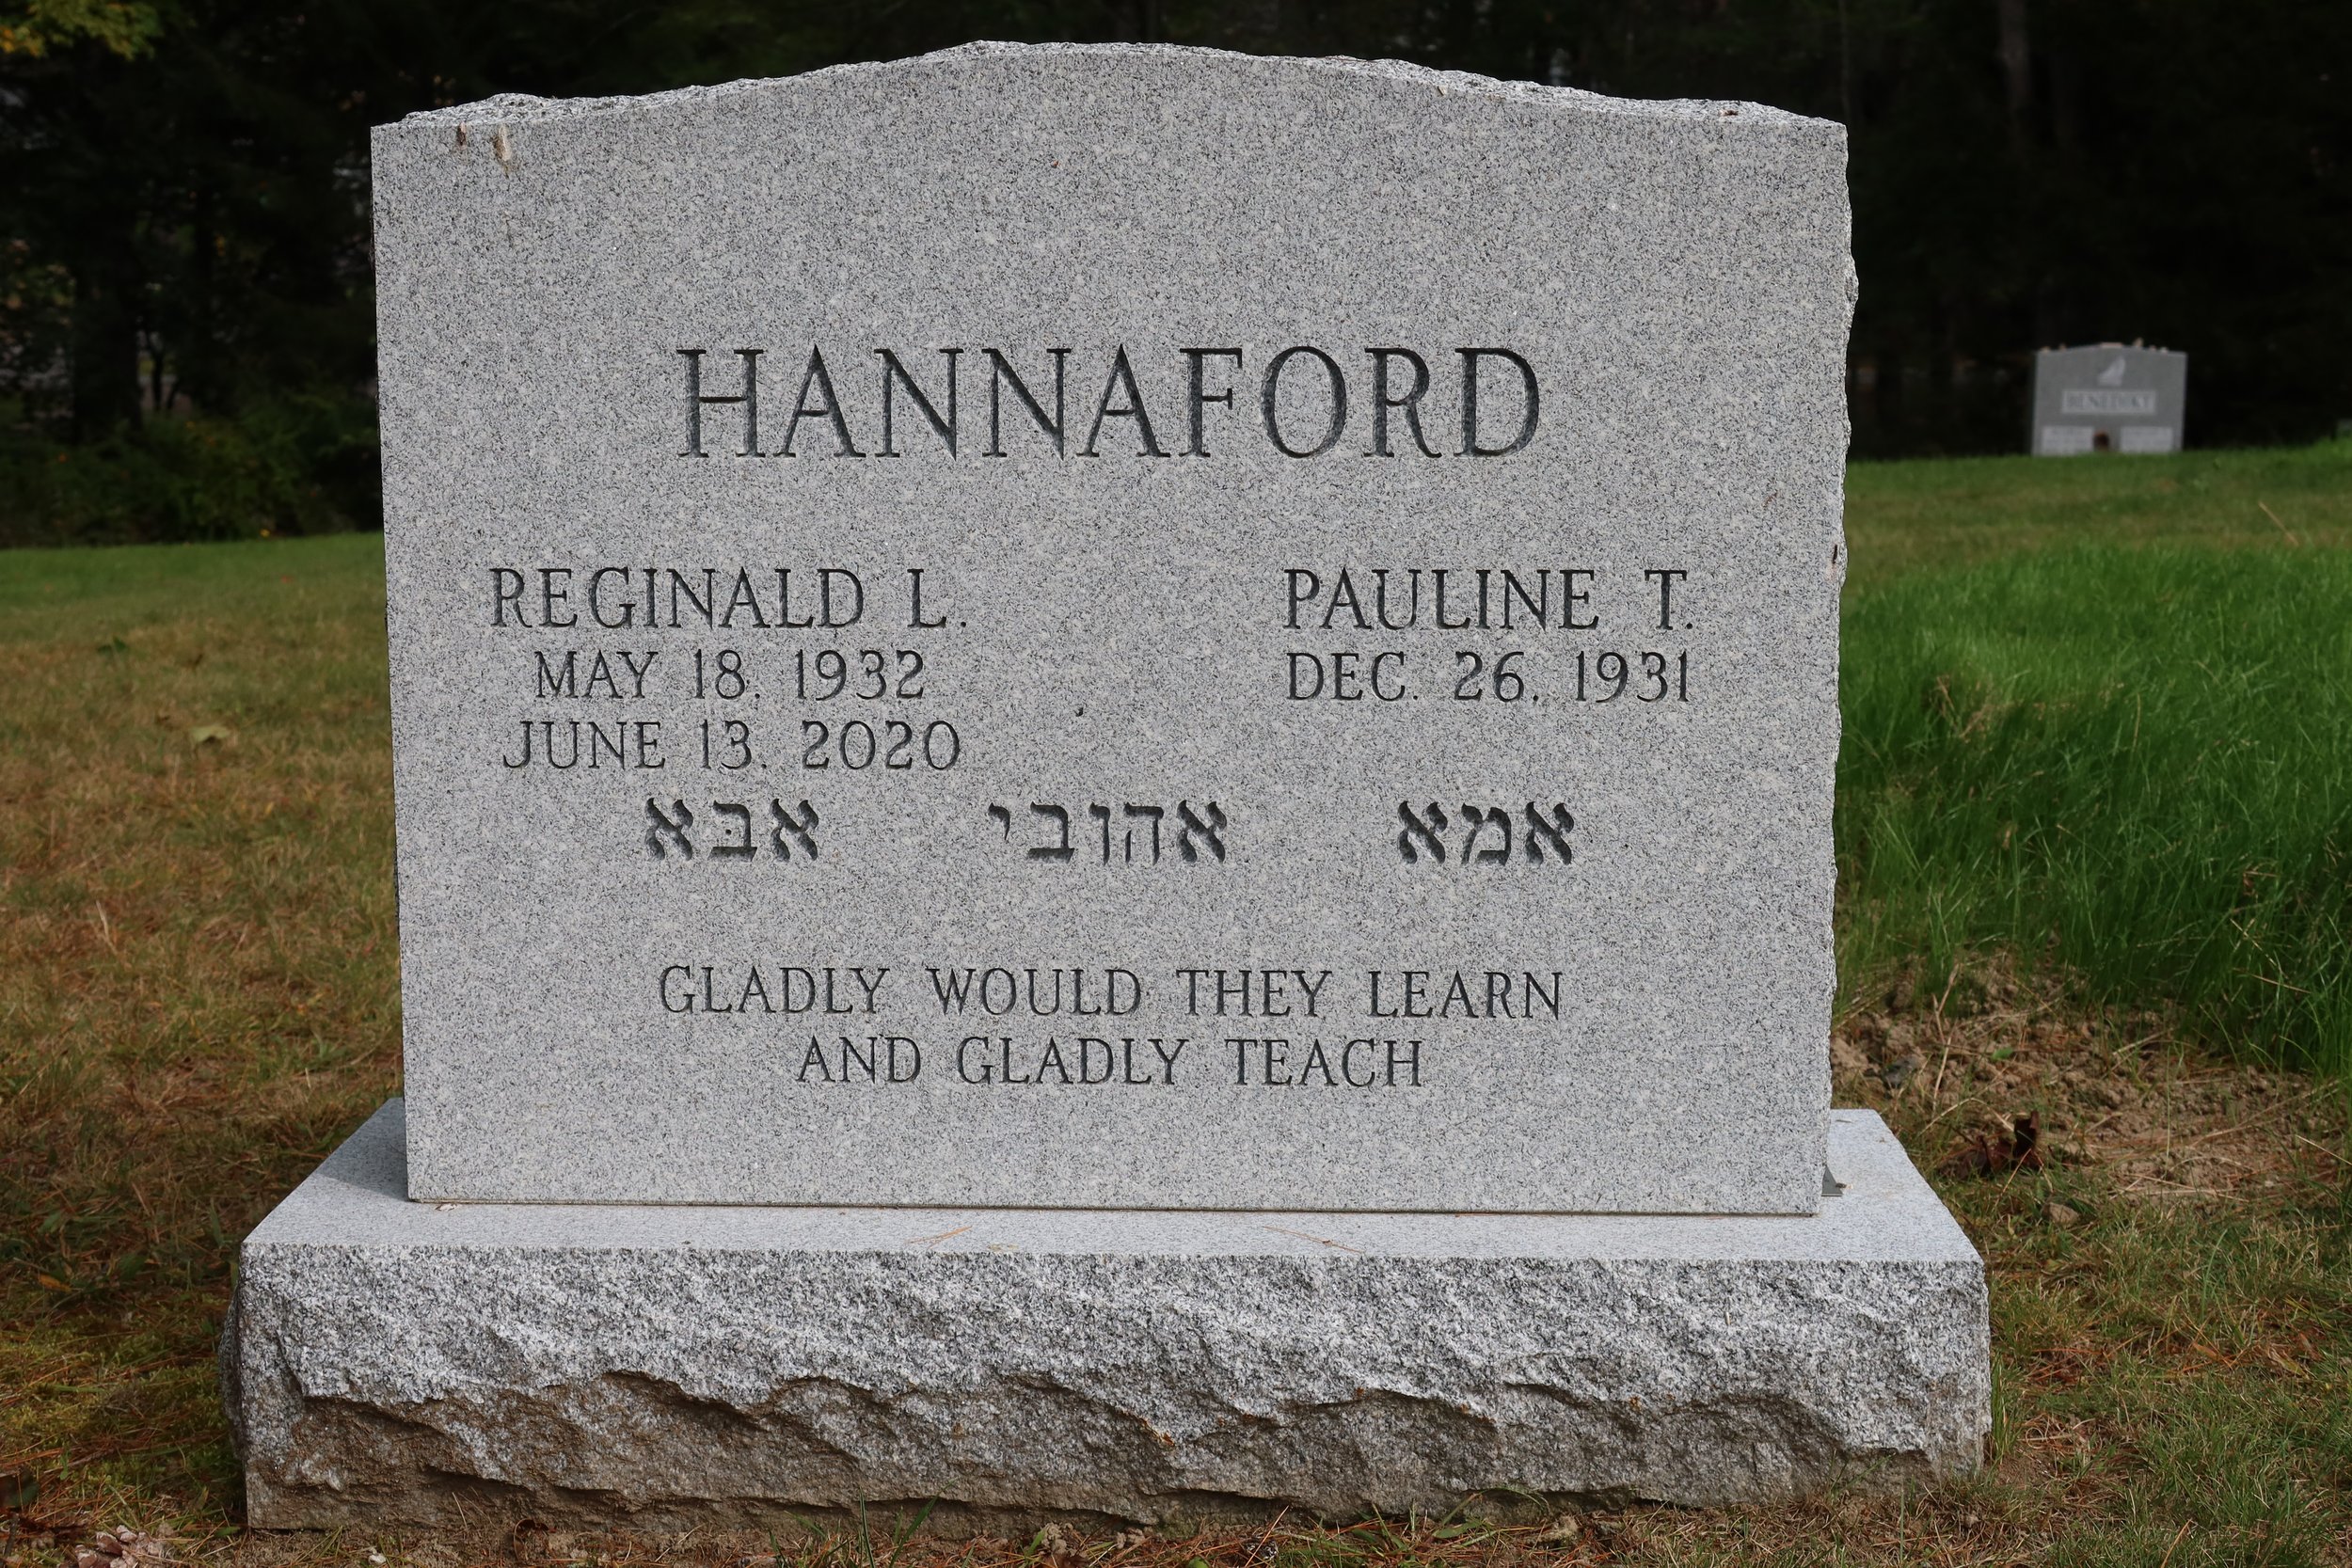 Reginald Hannaford